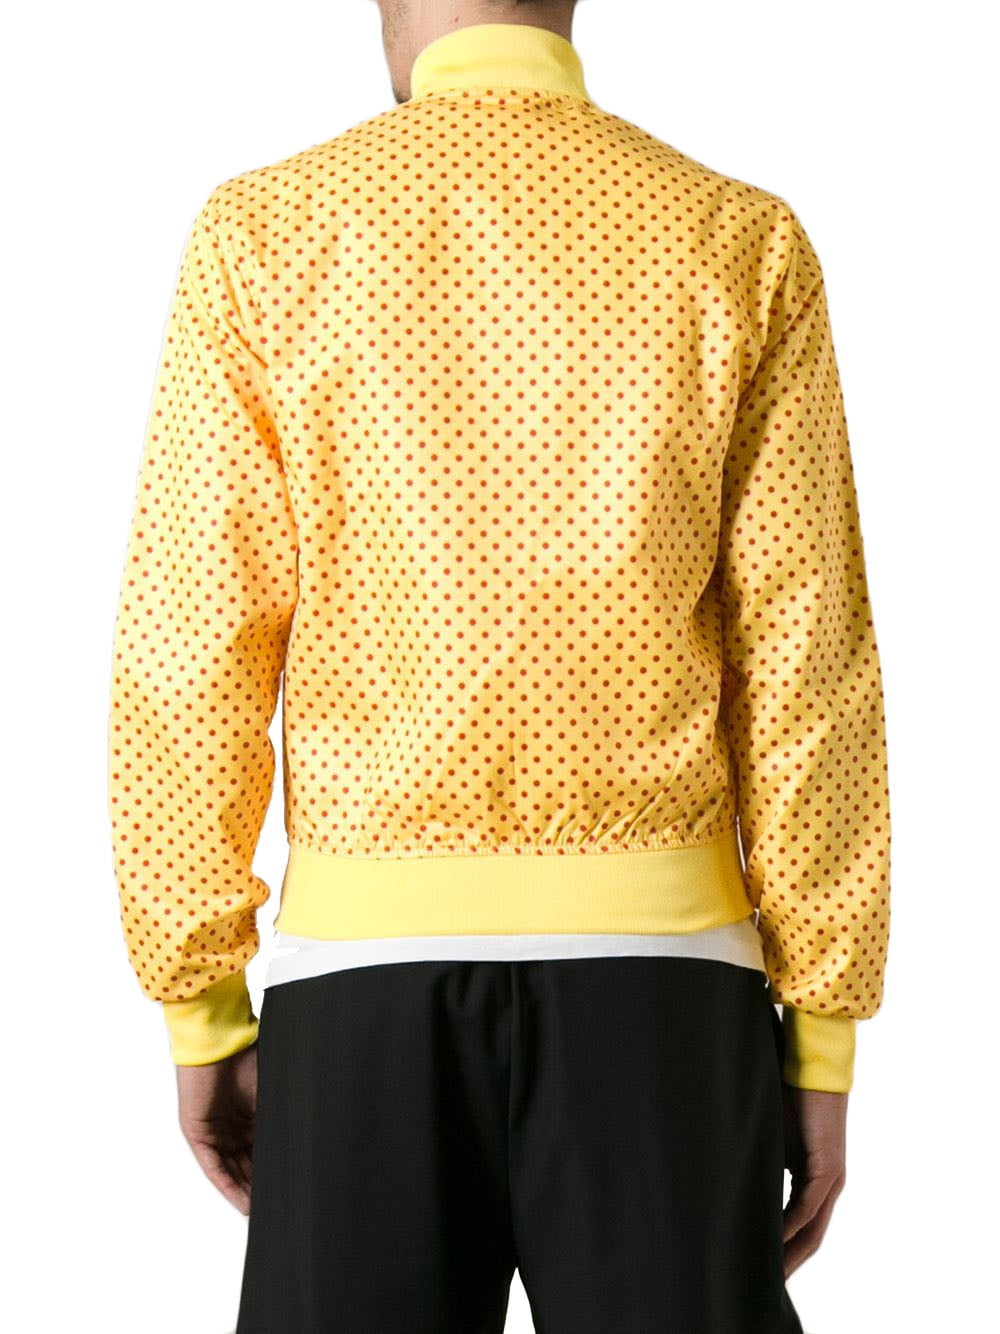 pharrell adidas jacket polka dot